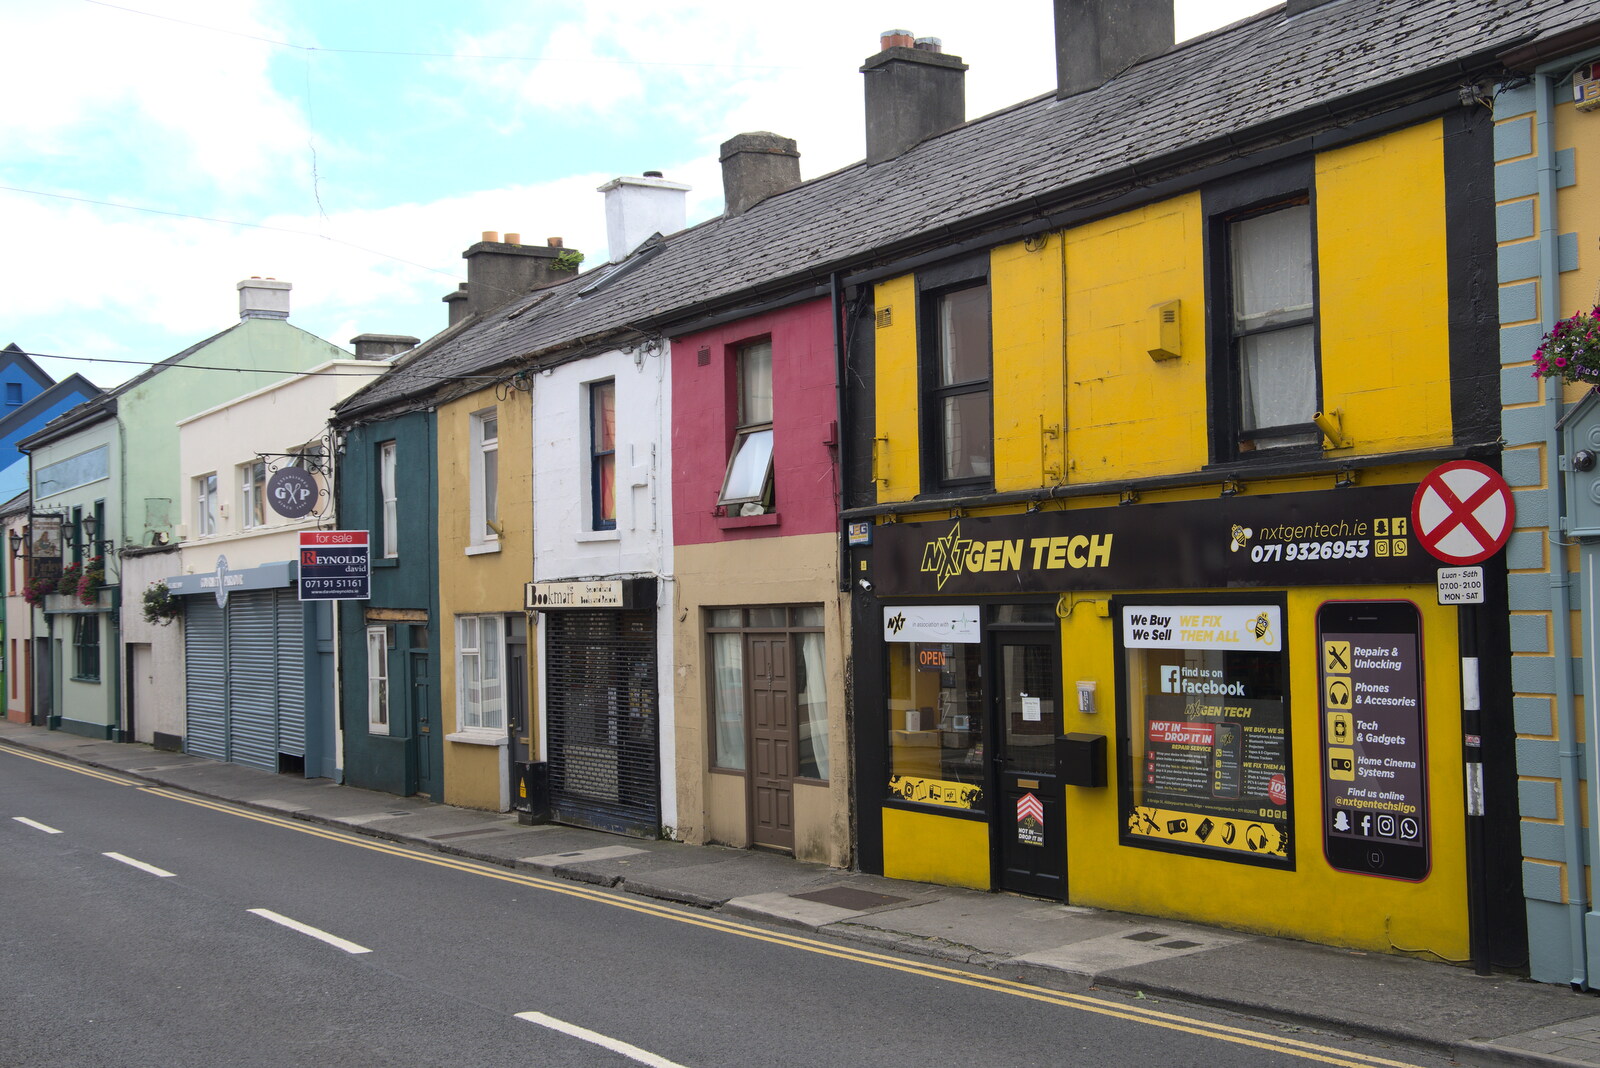 Pints of Guinness and Streedagh Beach, Grange and Sligo, Ireland - 9th August 2021: Shuttered shops on Bridge Street